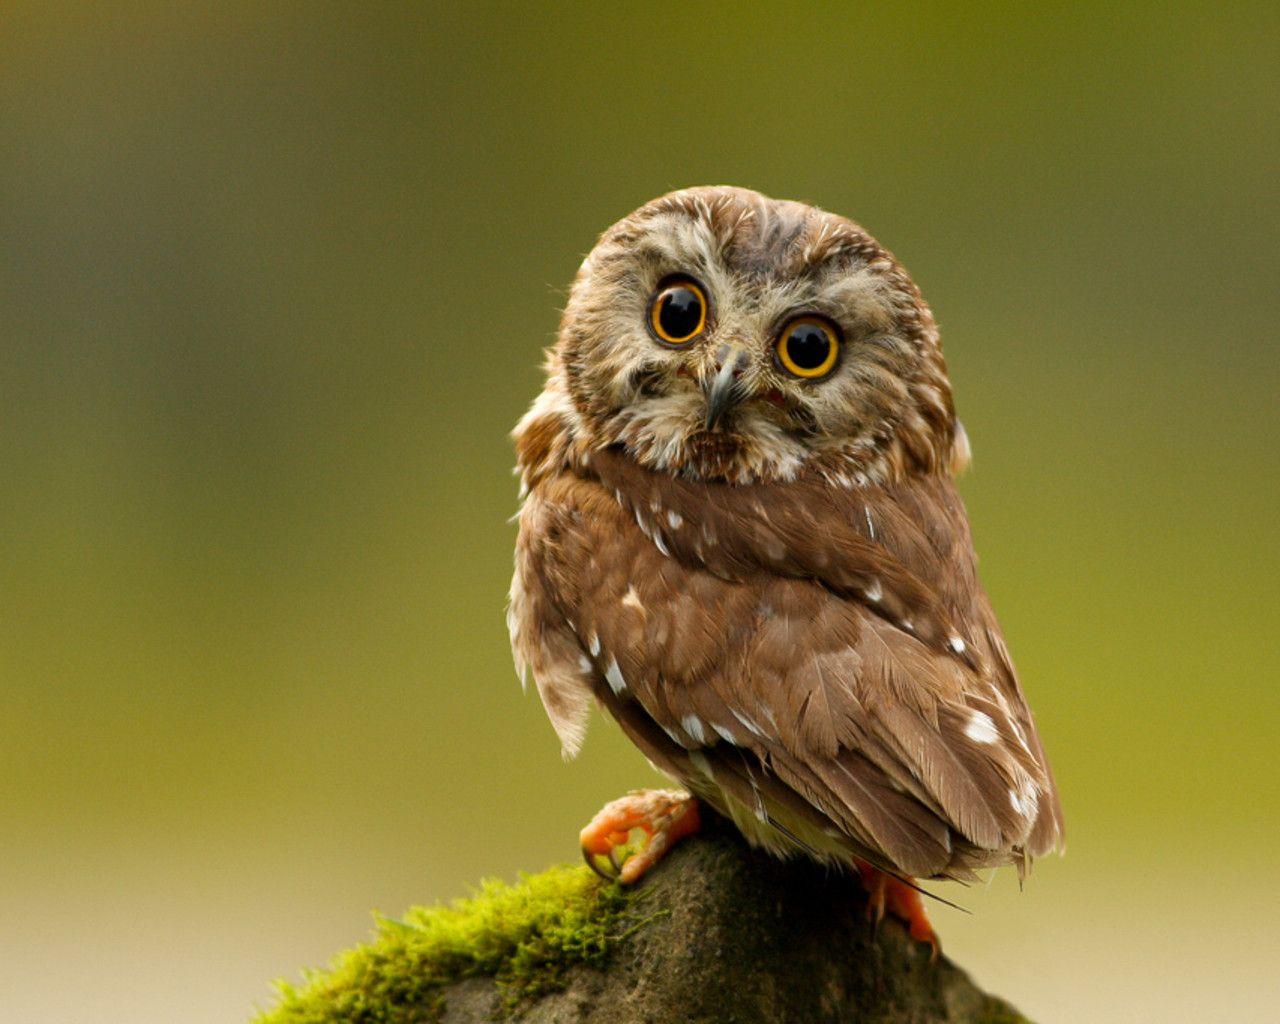 The best Cute owls wallpaper ideas. Owl